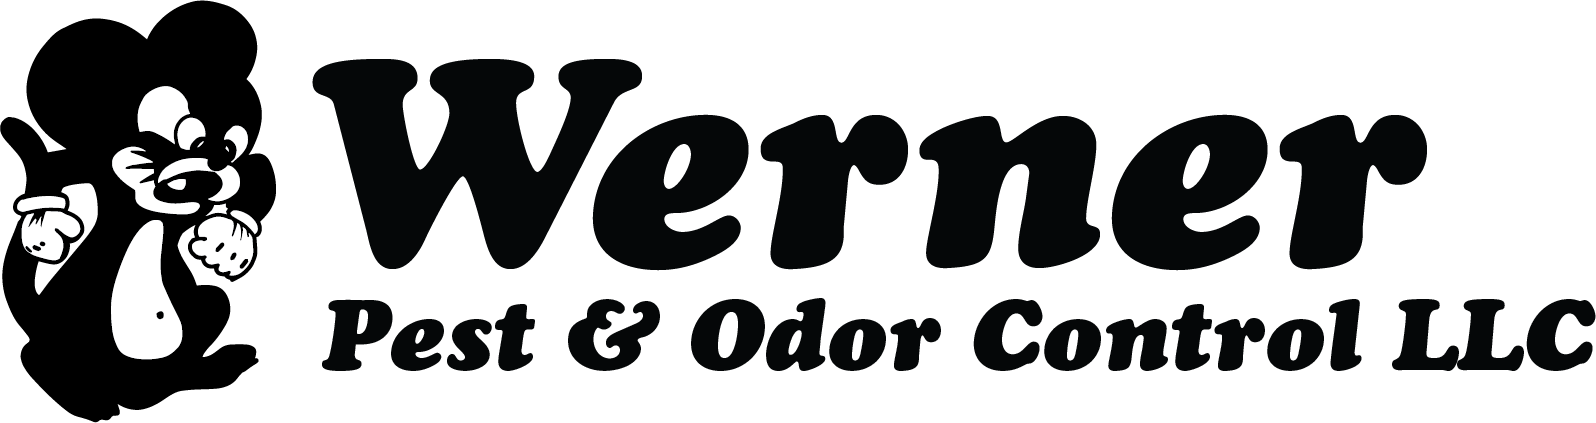 Werner Pest and Odor Control, LLC